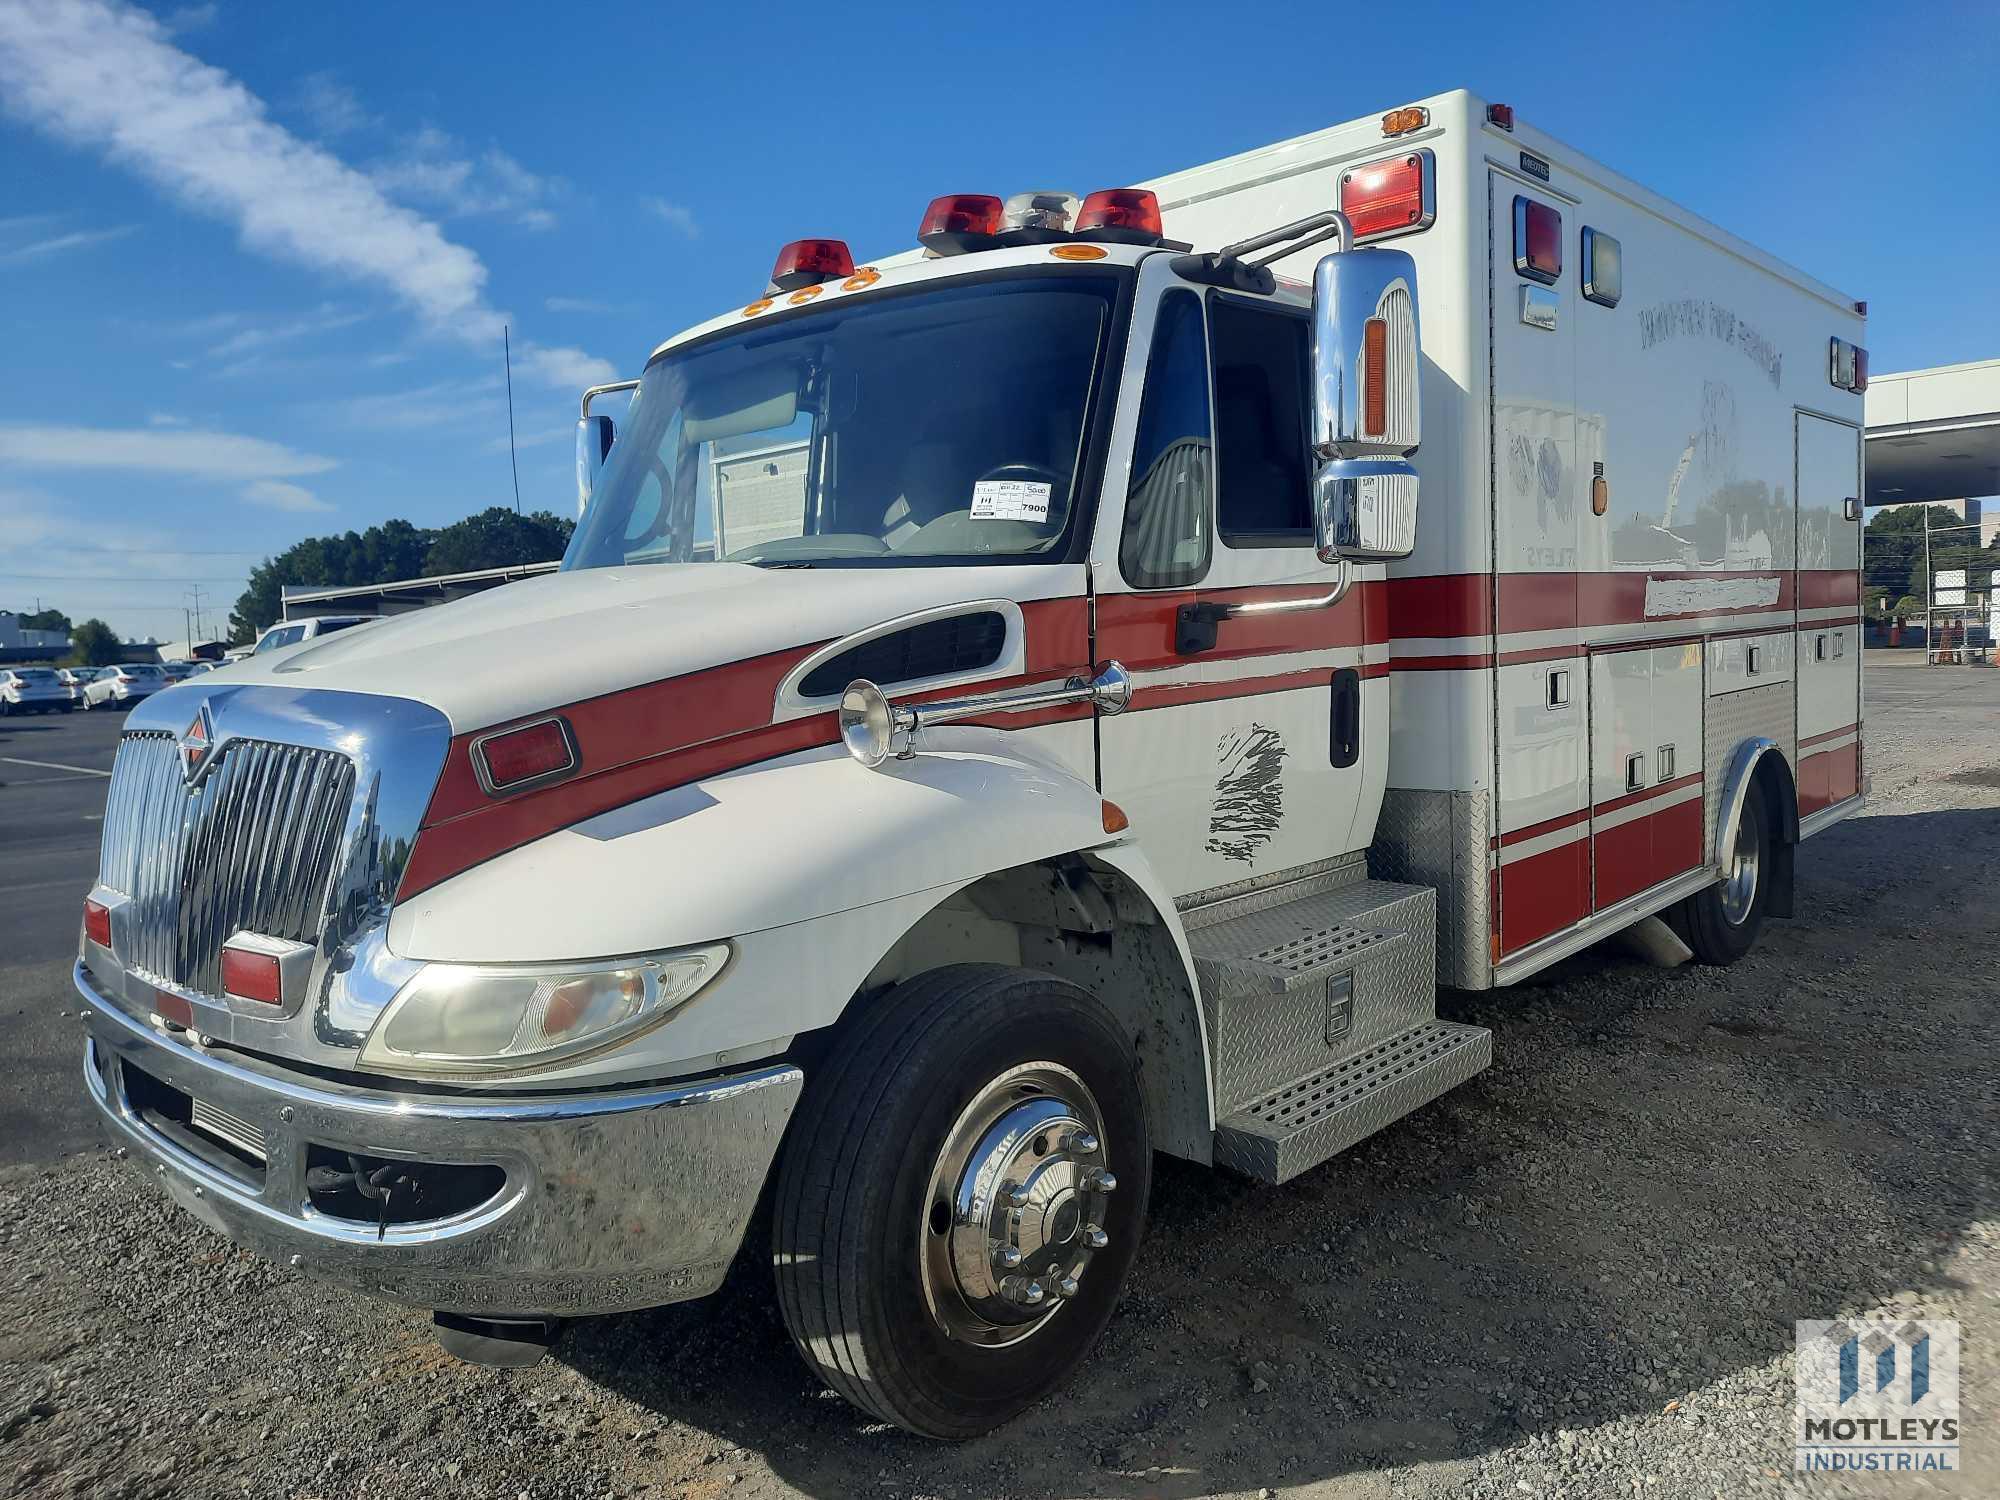 2010 Medtec Ambulance, International 4300LP